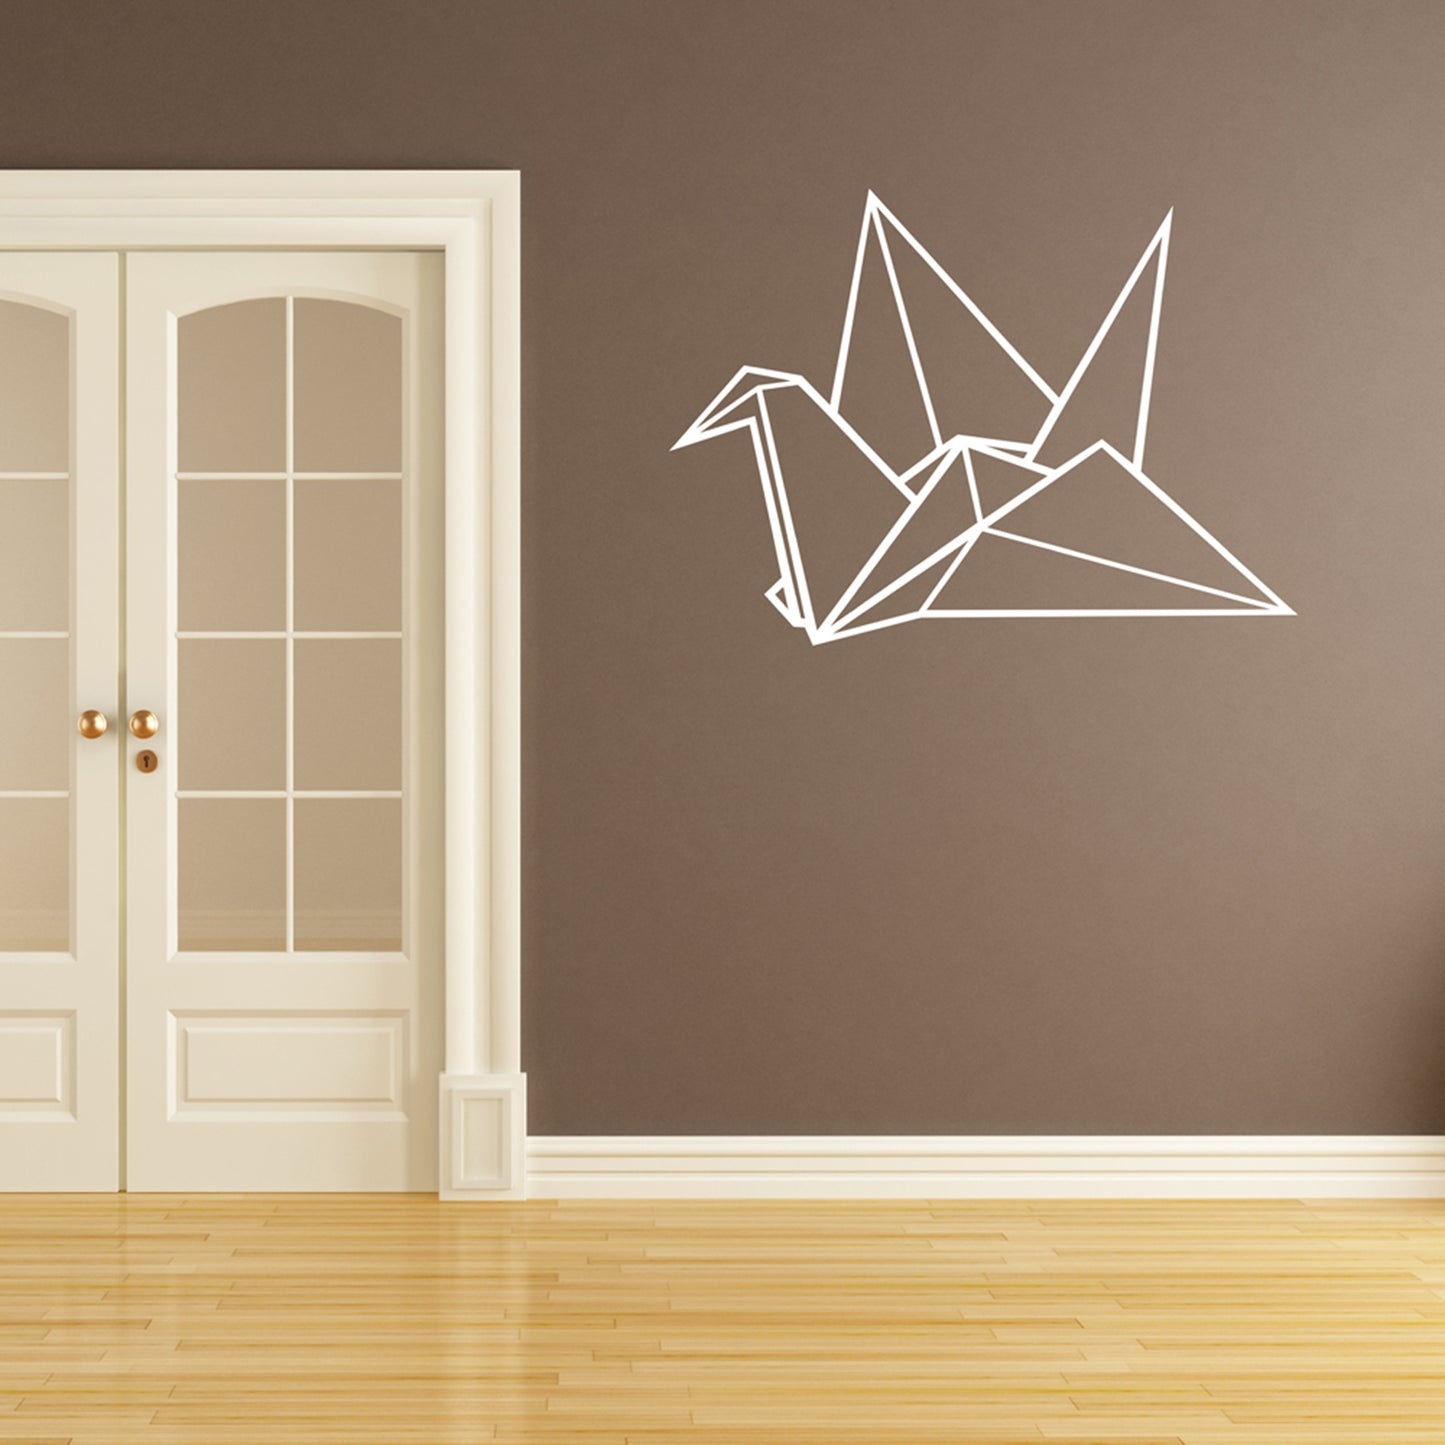 Origami crane | Wall decal